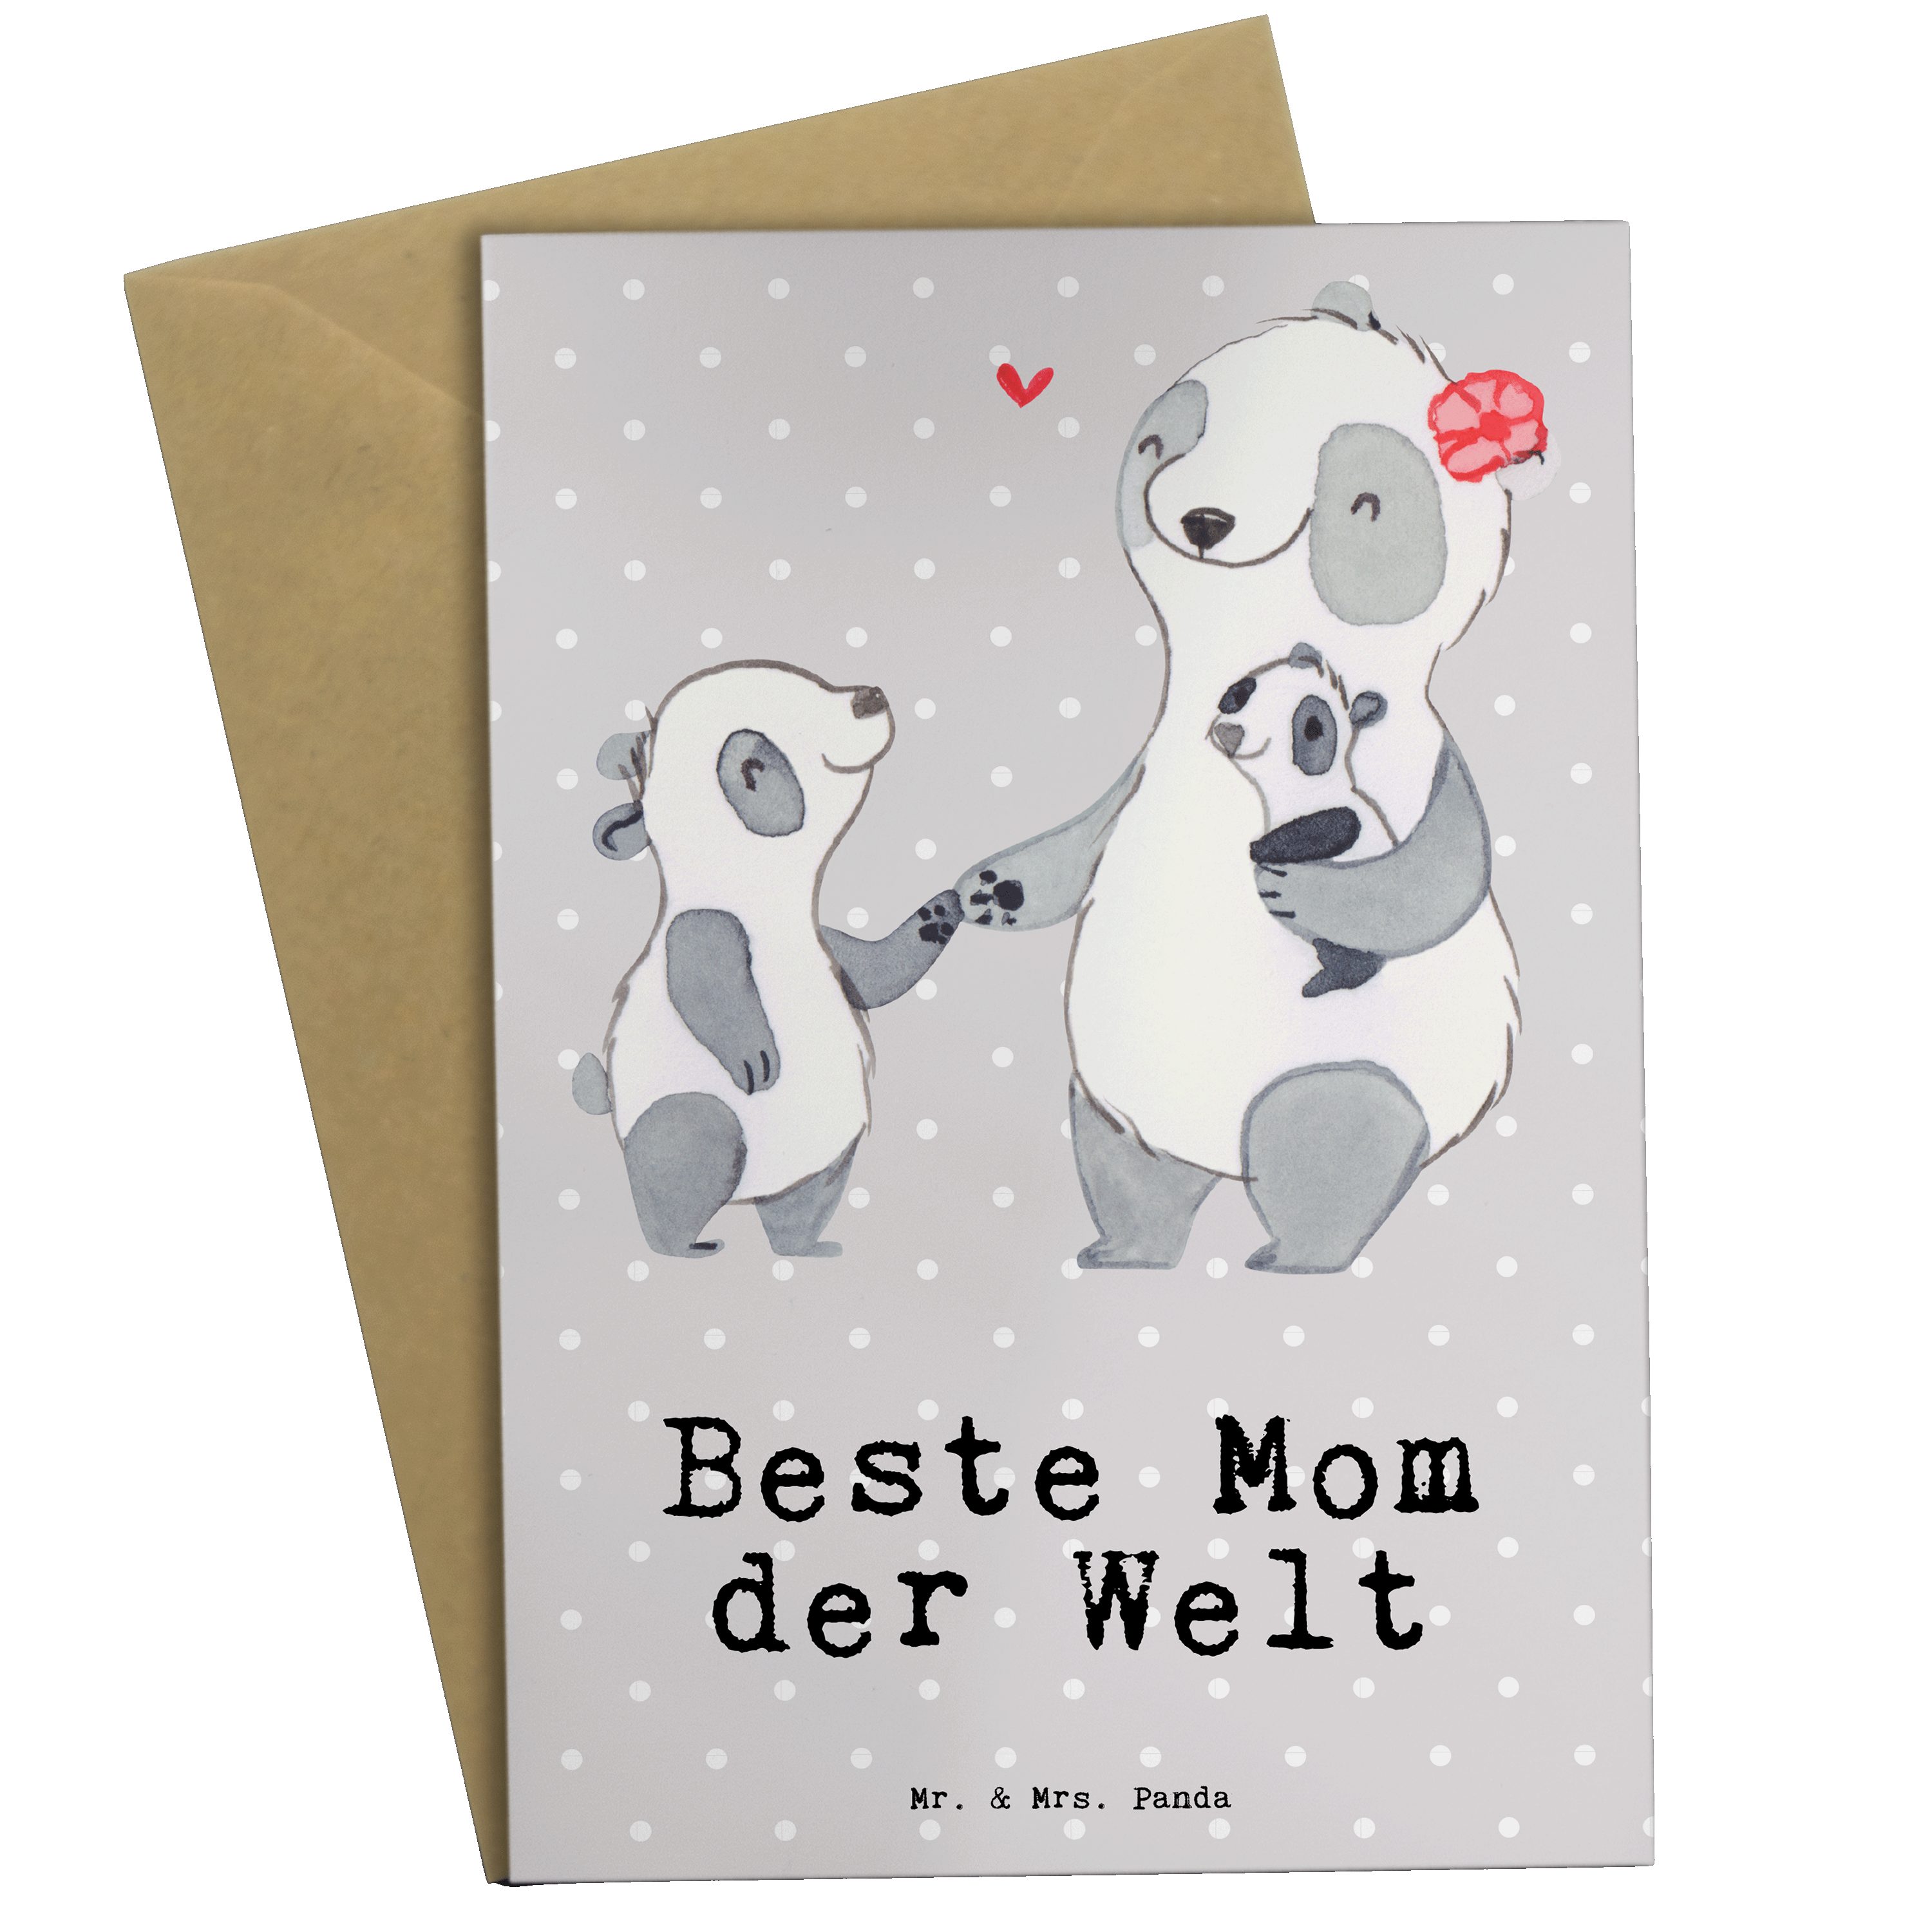 Mr. & Mrs. Panda Grußkarte Panda Beste Mom der Welt - Grau Pastell - Geschenk, Dankeschön, Danke